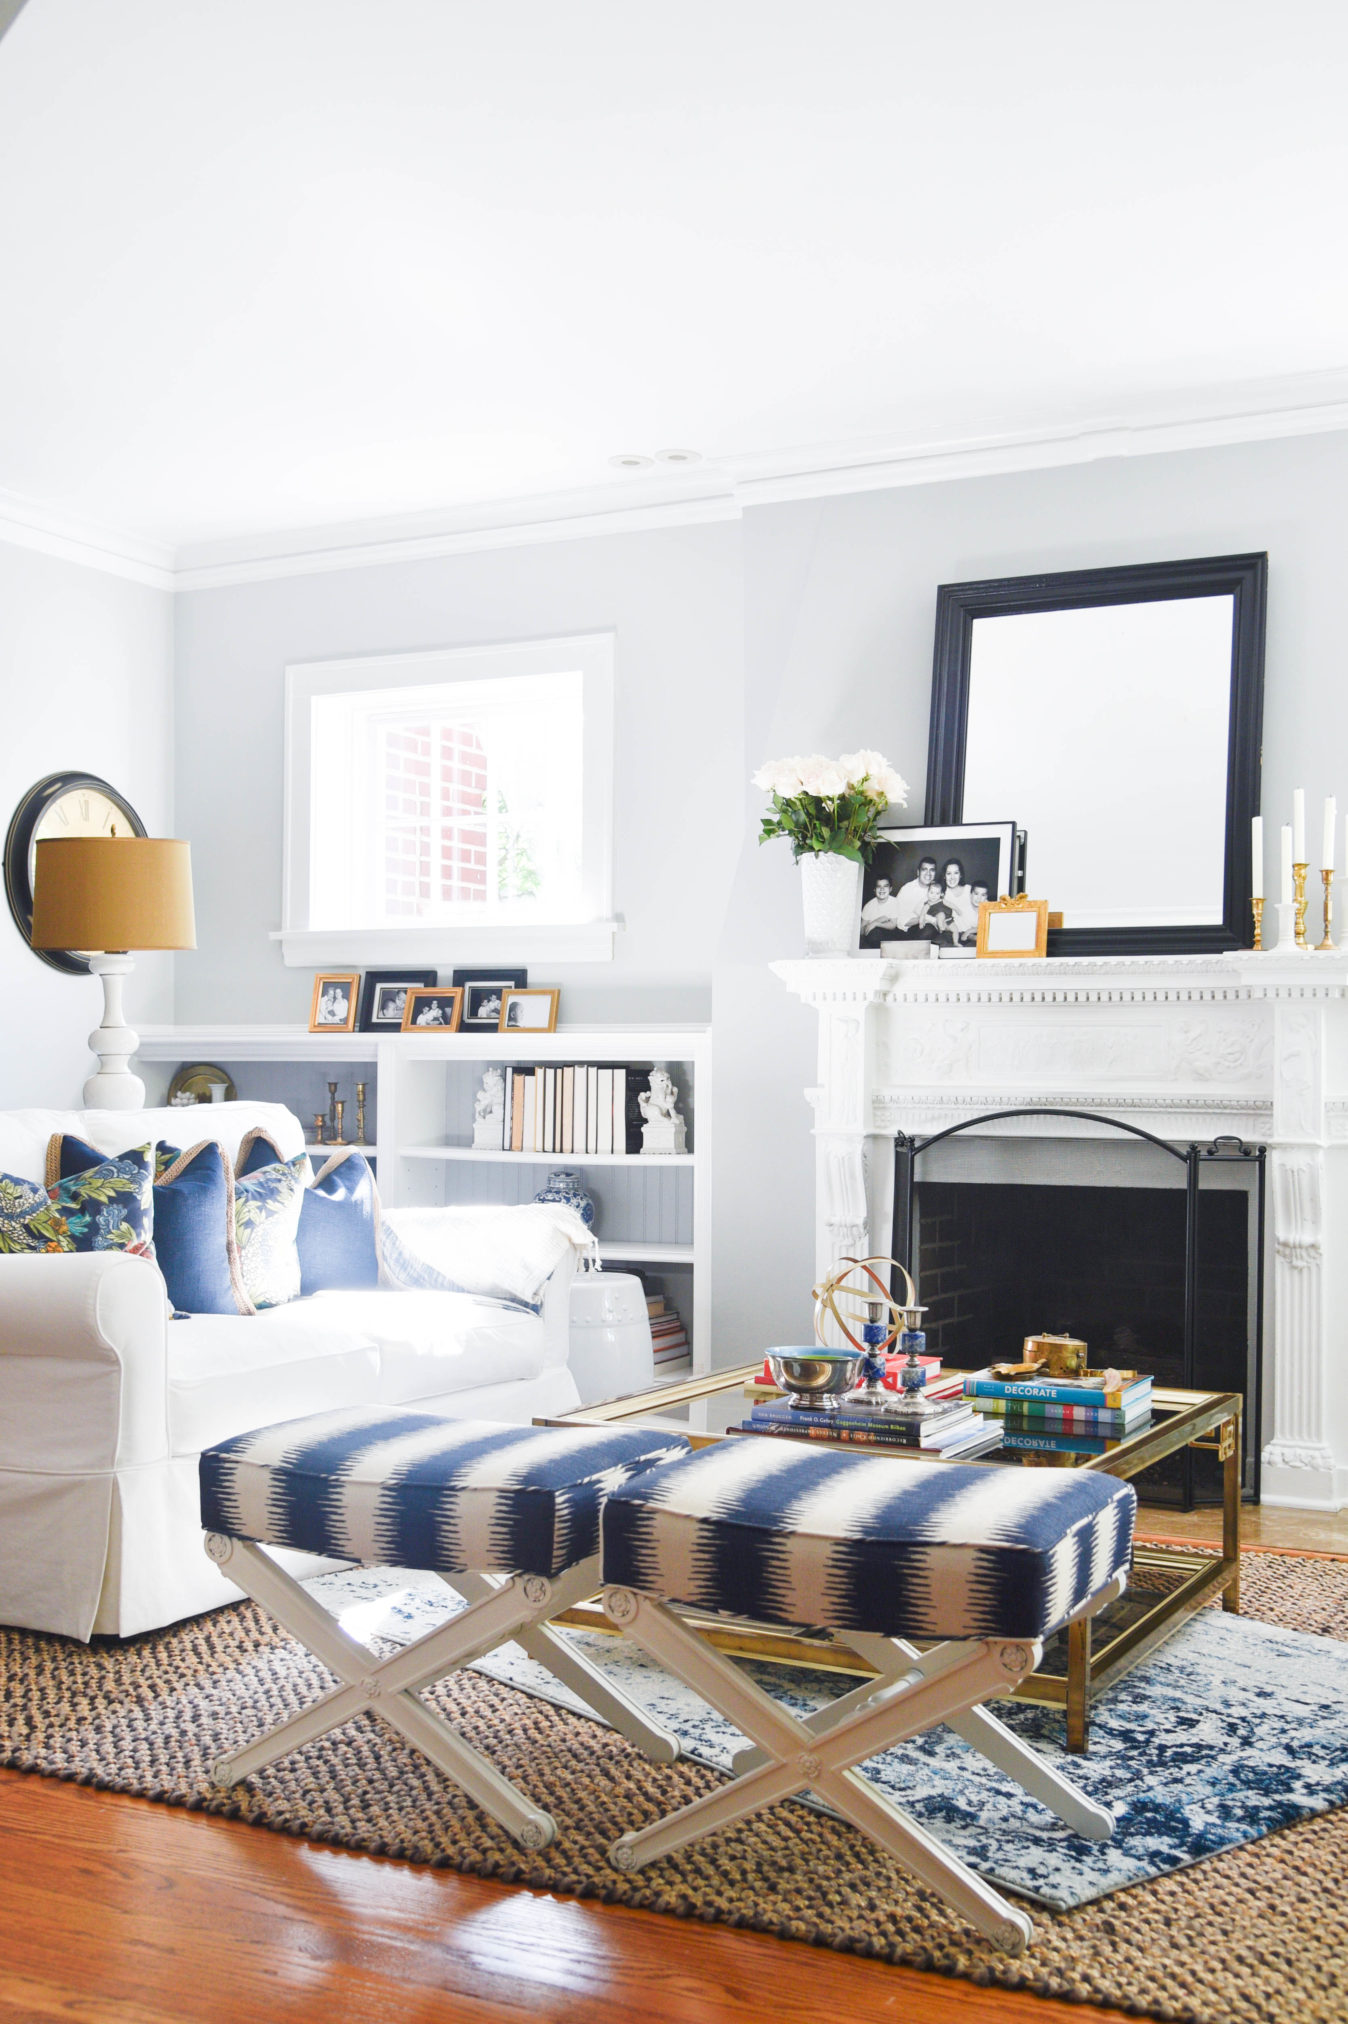 Family Friendly Living Room Ideas - Design Tips - A Blissful Nest